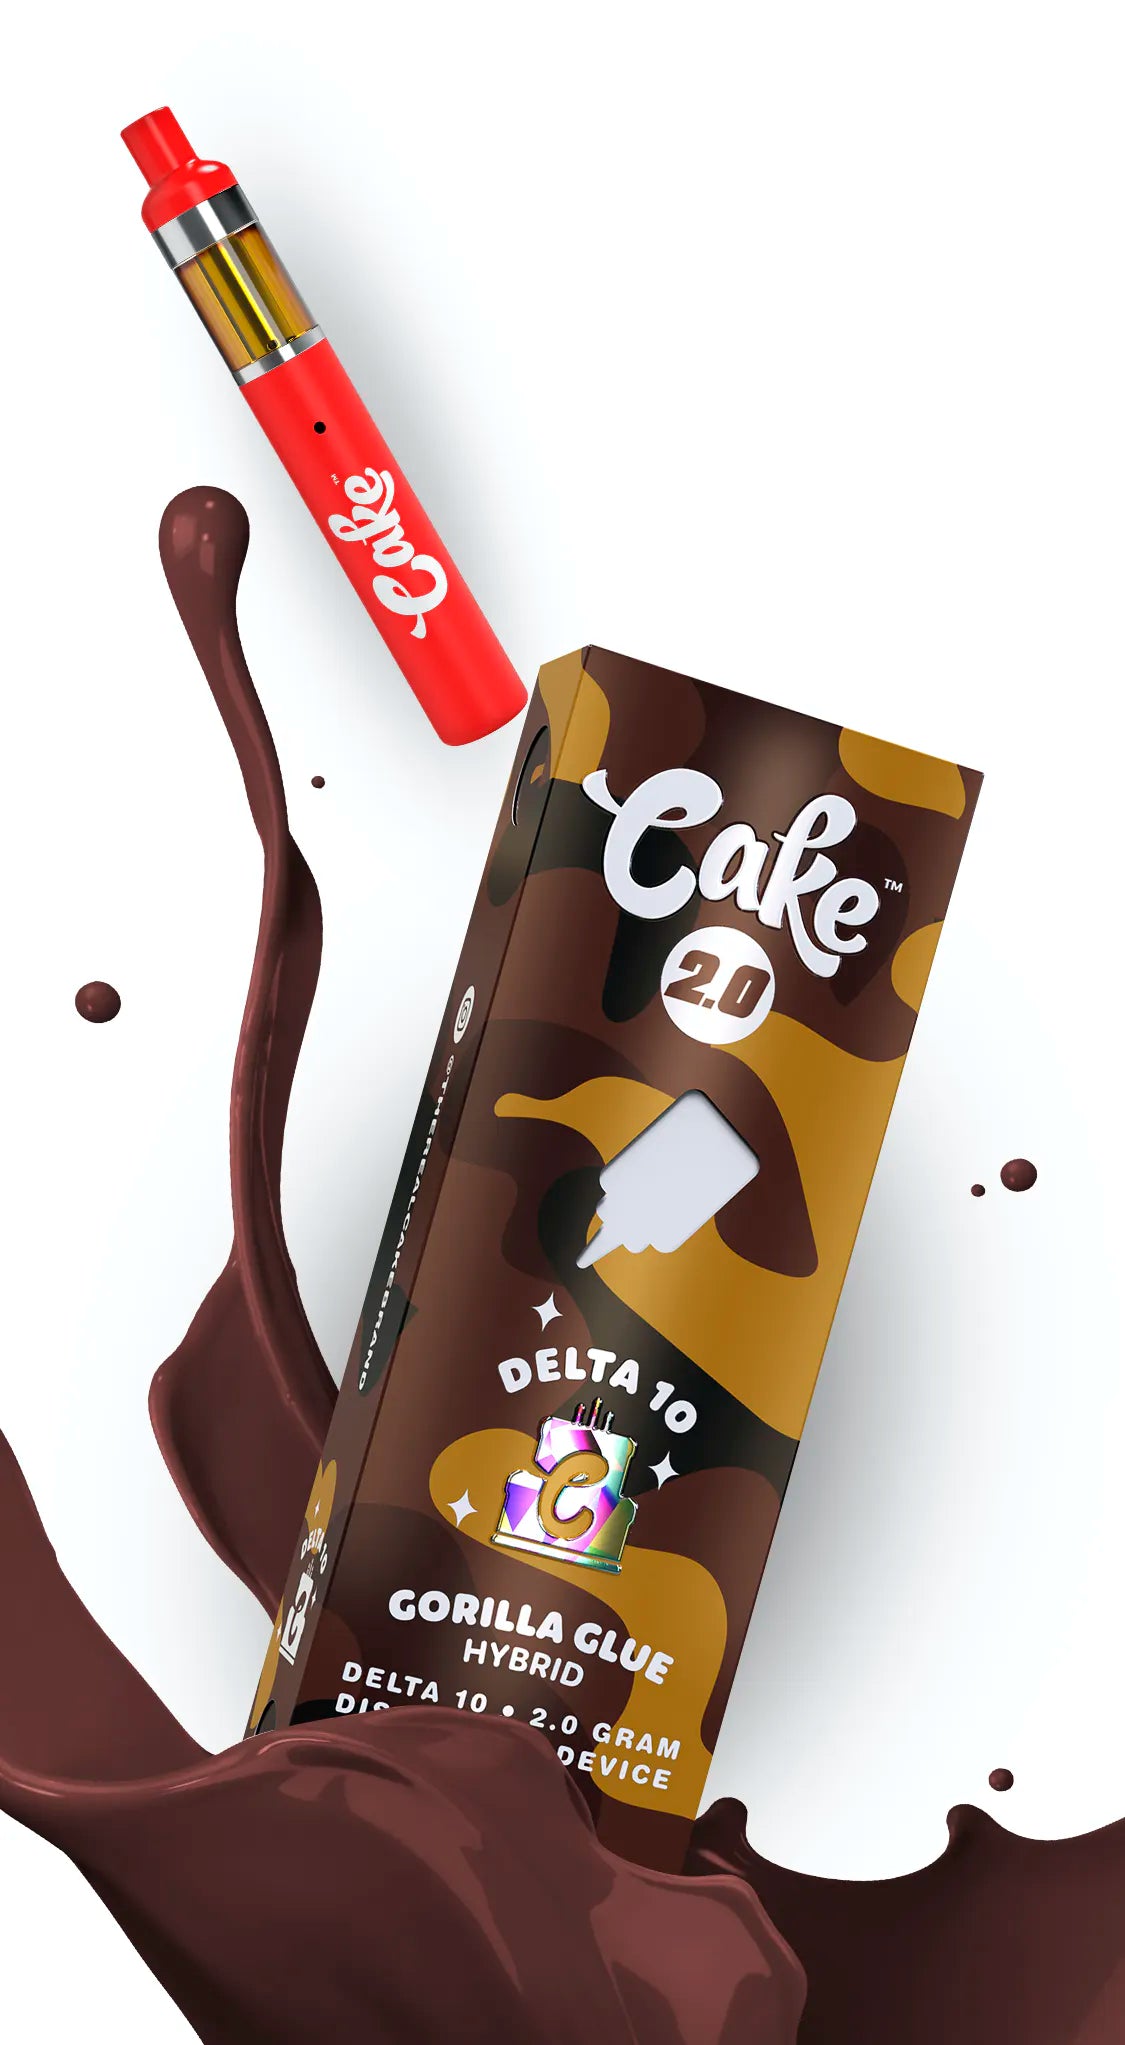 Cake 2.0 Delta-10 Disposables (2g) Best Price